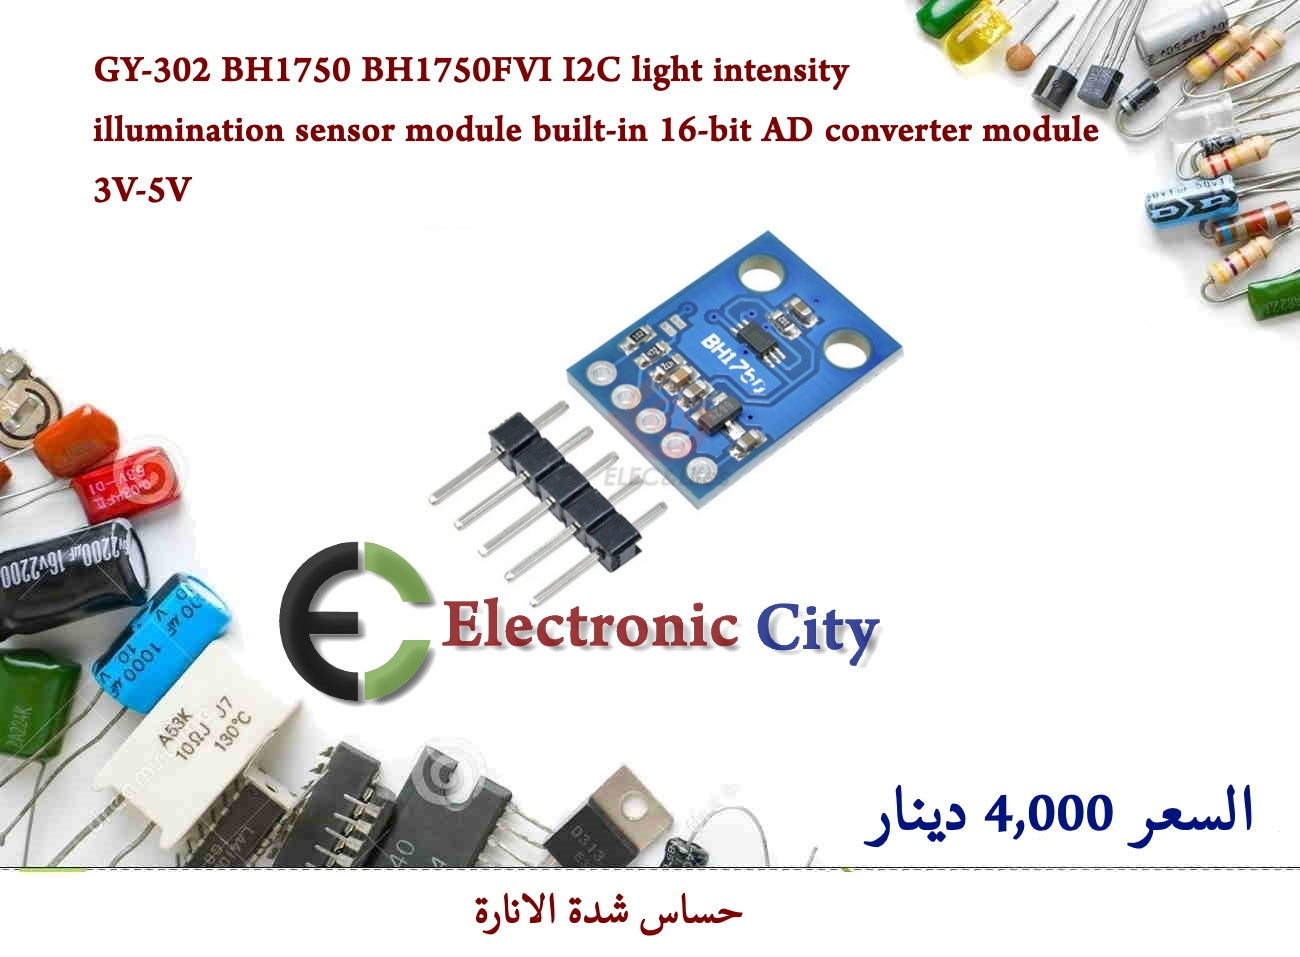 GY-302 BH1750 BH1750FVI I2C light intensity illumination sensor module